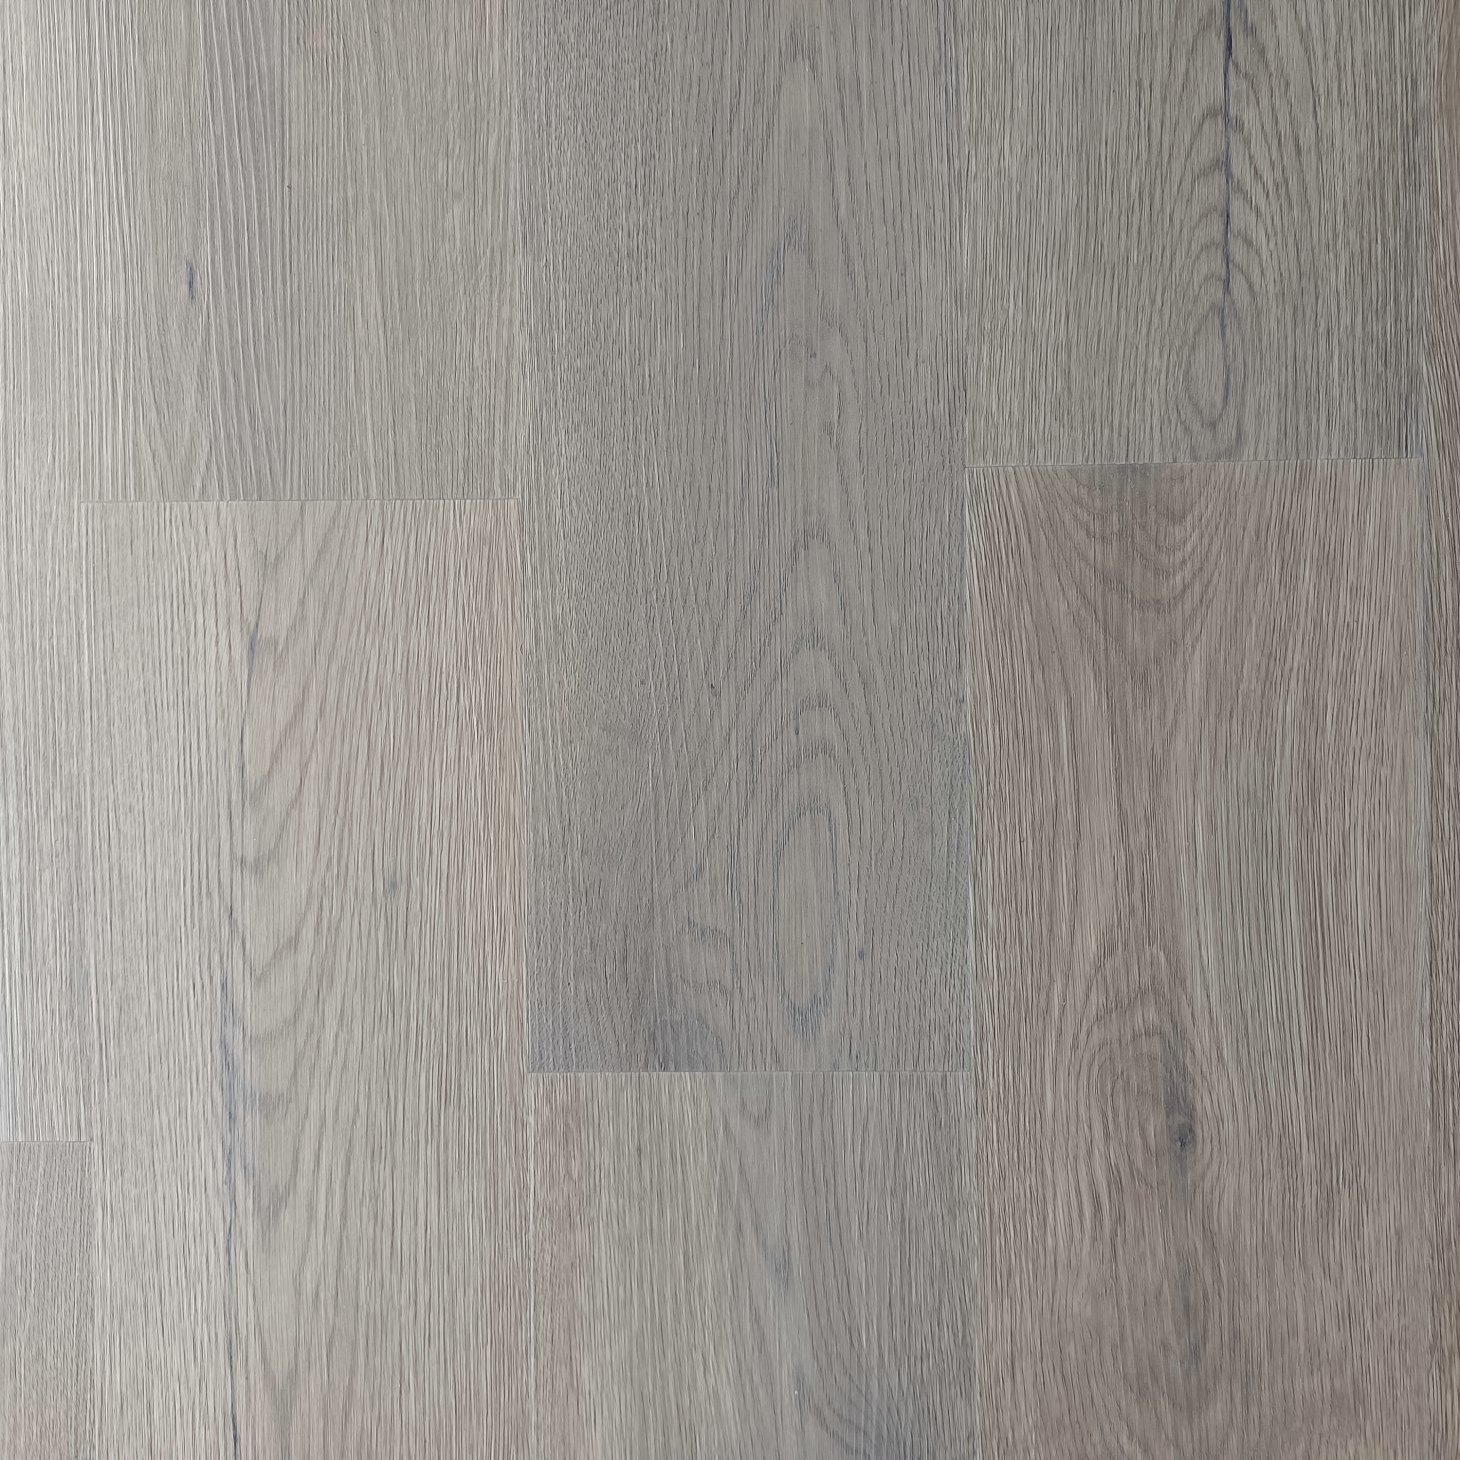 OEM/ODM Factory Easy Wood Flooring -
 Stable structure ABA luxury rigid spc flooring from Kangton – Kangton